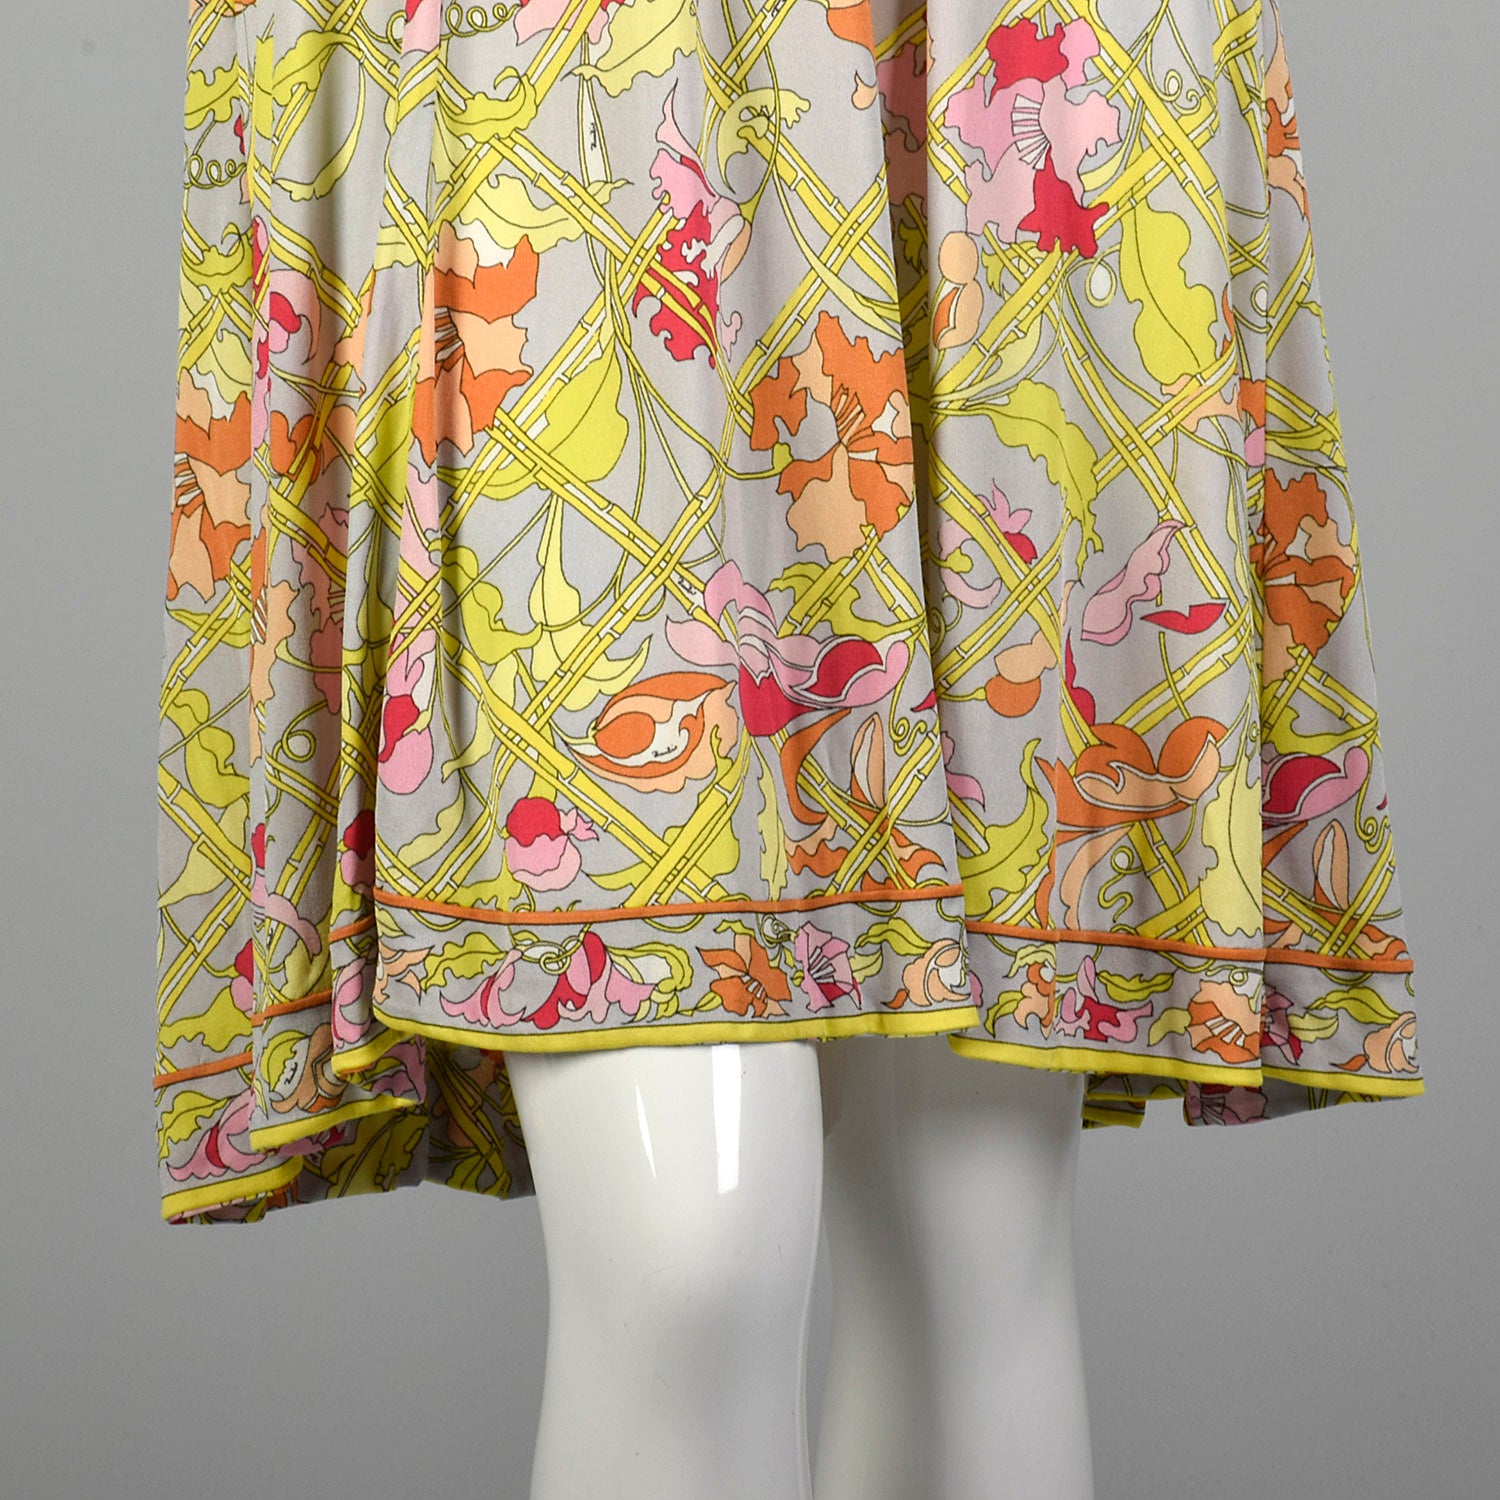 EMILIO PUCCI 1960s Vintage Signature Print Silk Jersey Dress Size